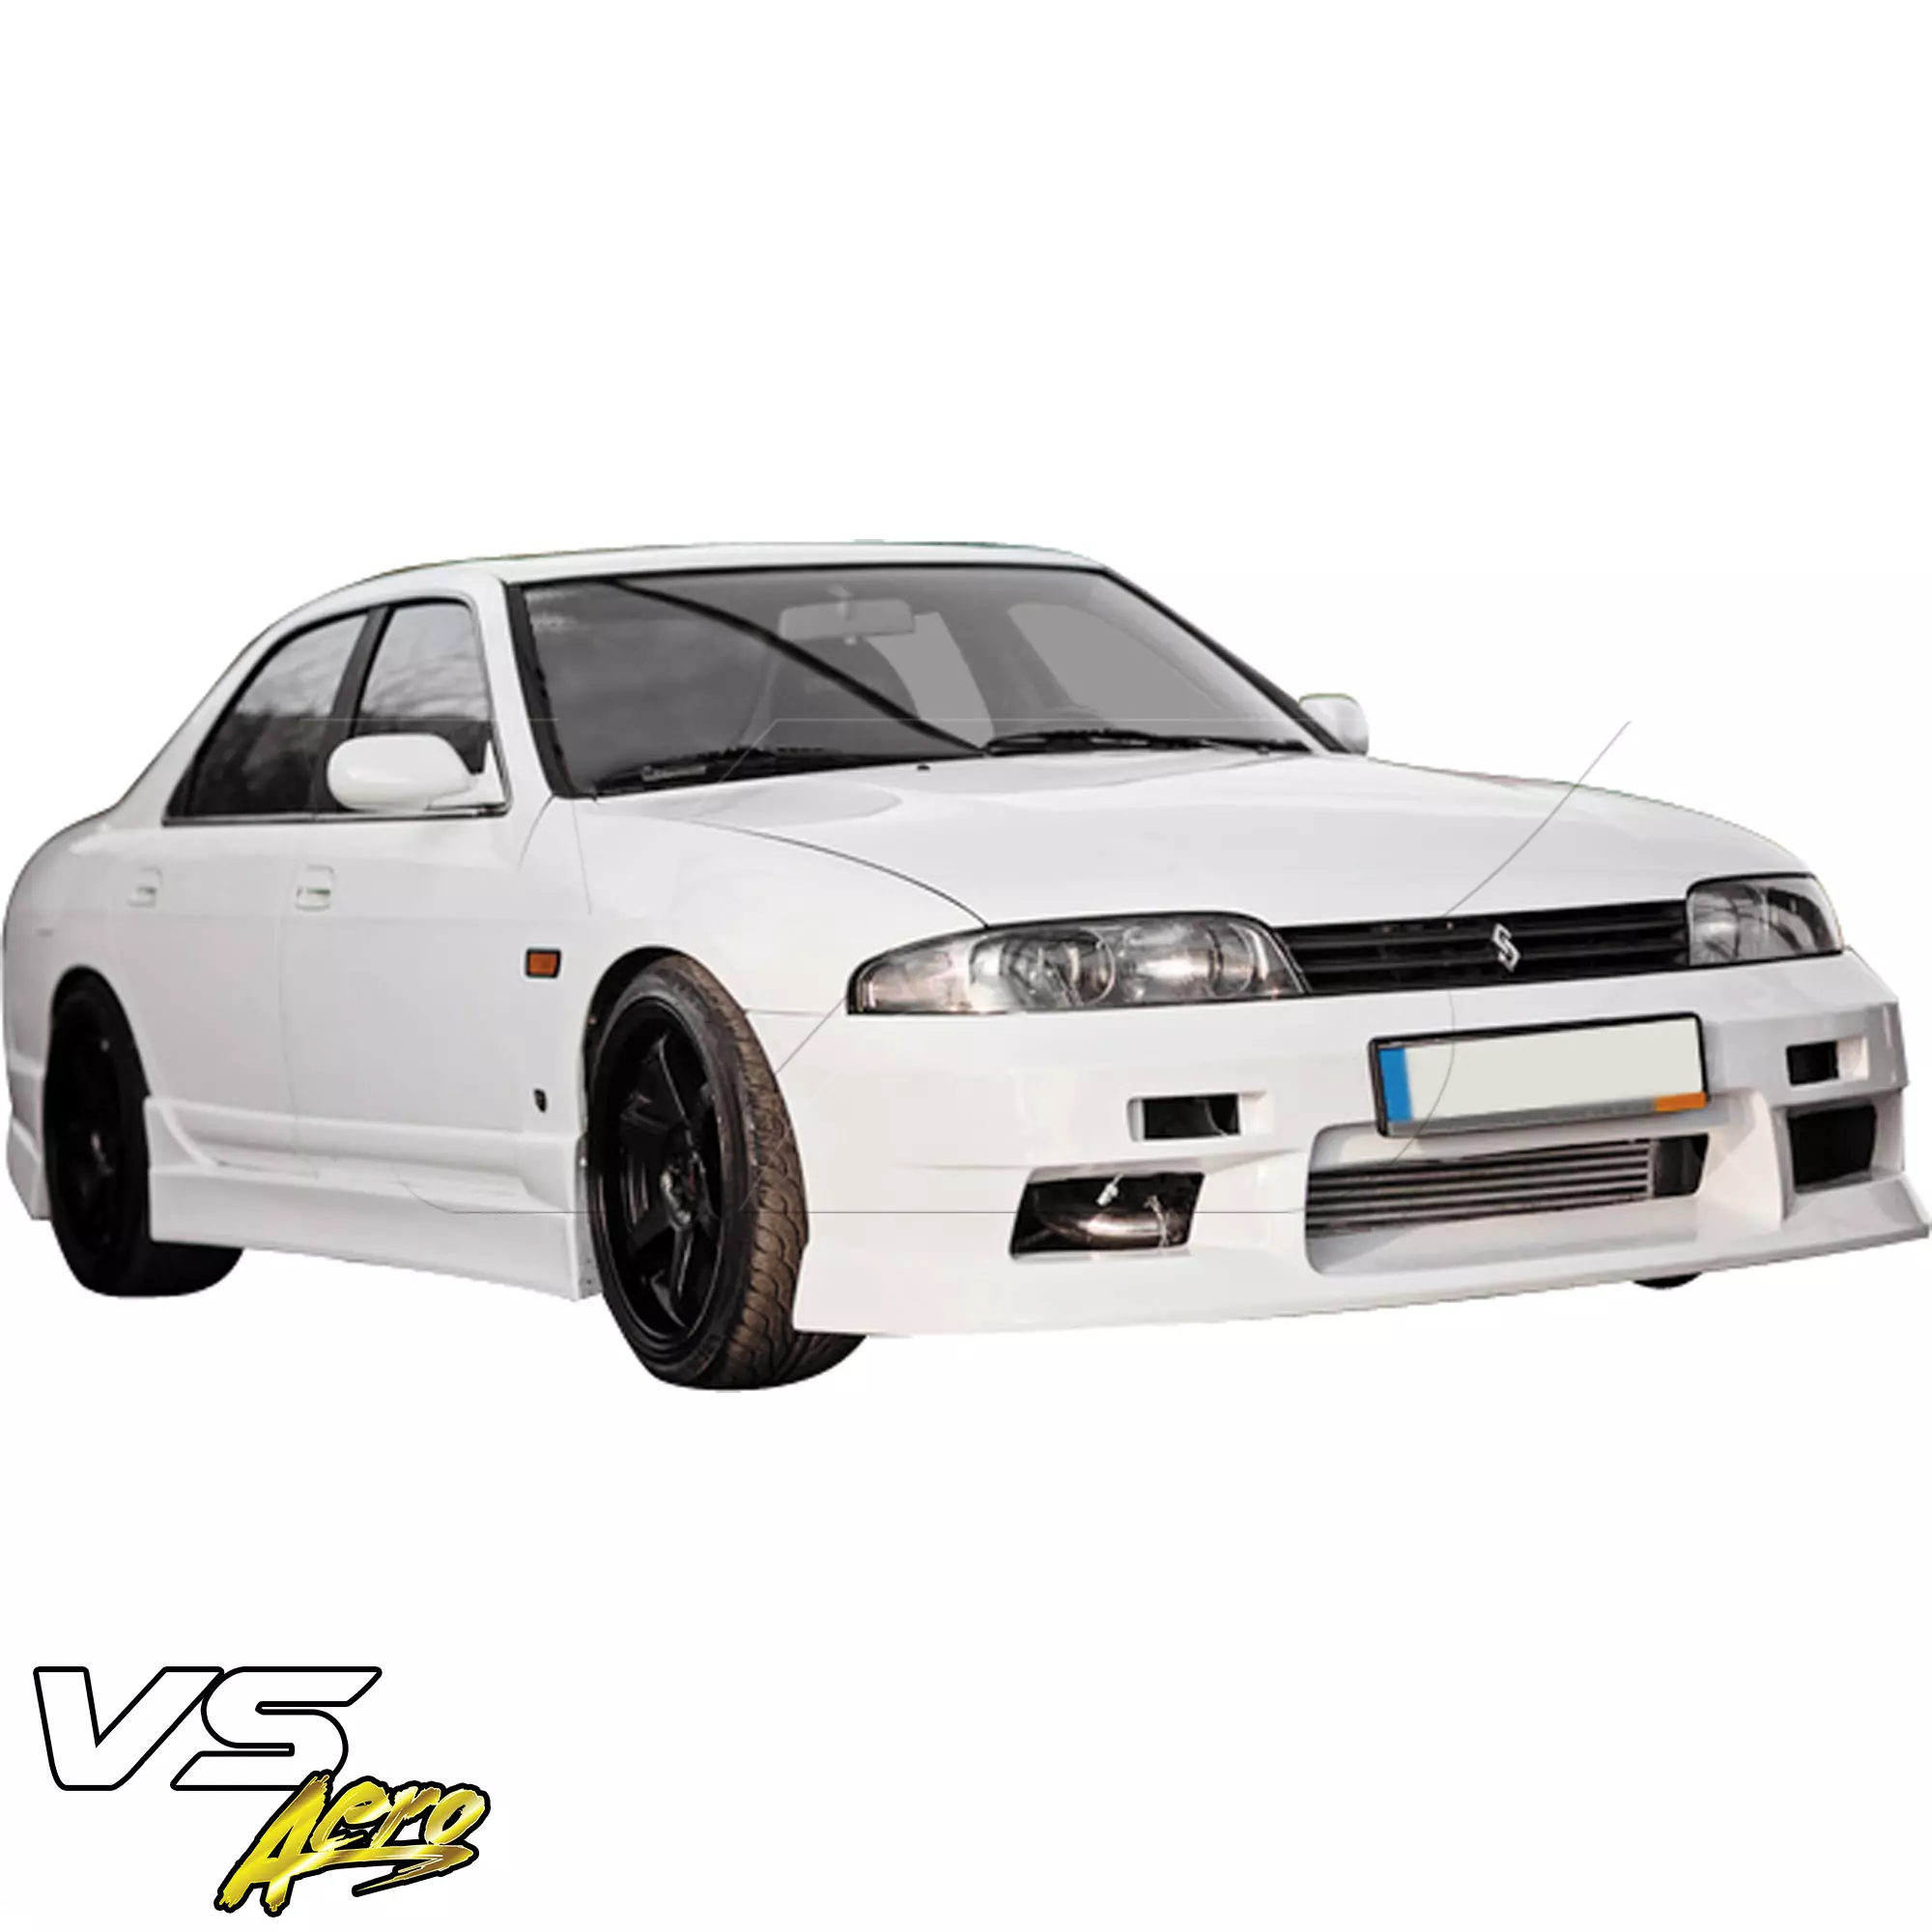 VSaero FRP MSPO Body Kit 4pc > Nissan Skyline R33 GTS 1995-1998 > 2dr Coupe - Image 1